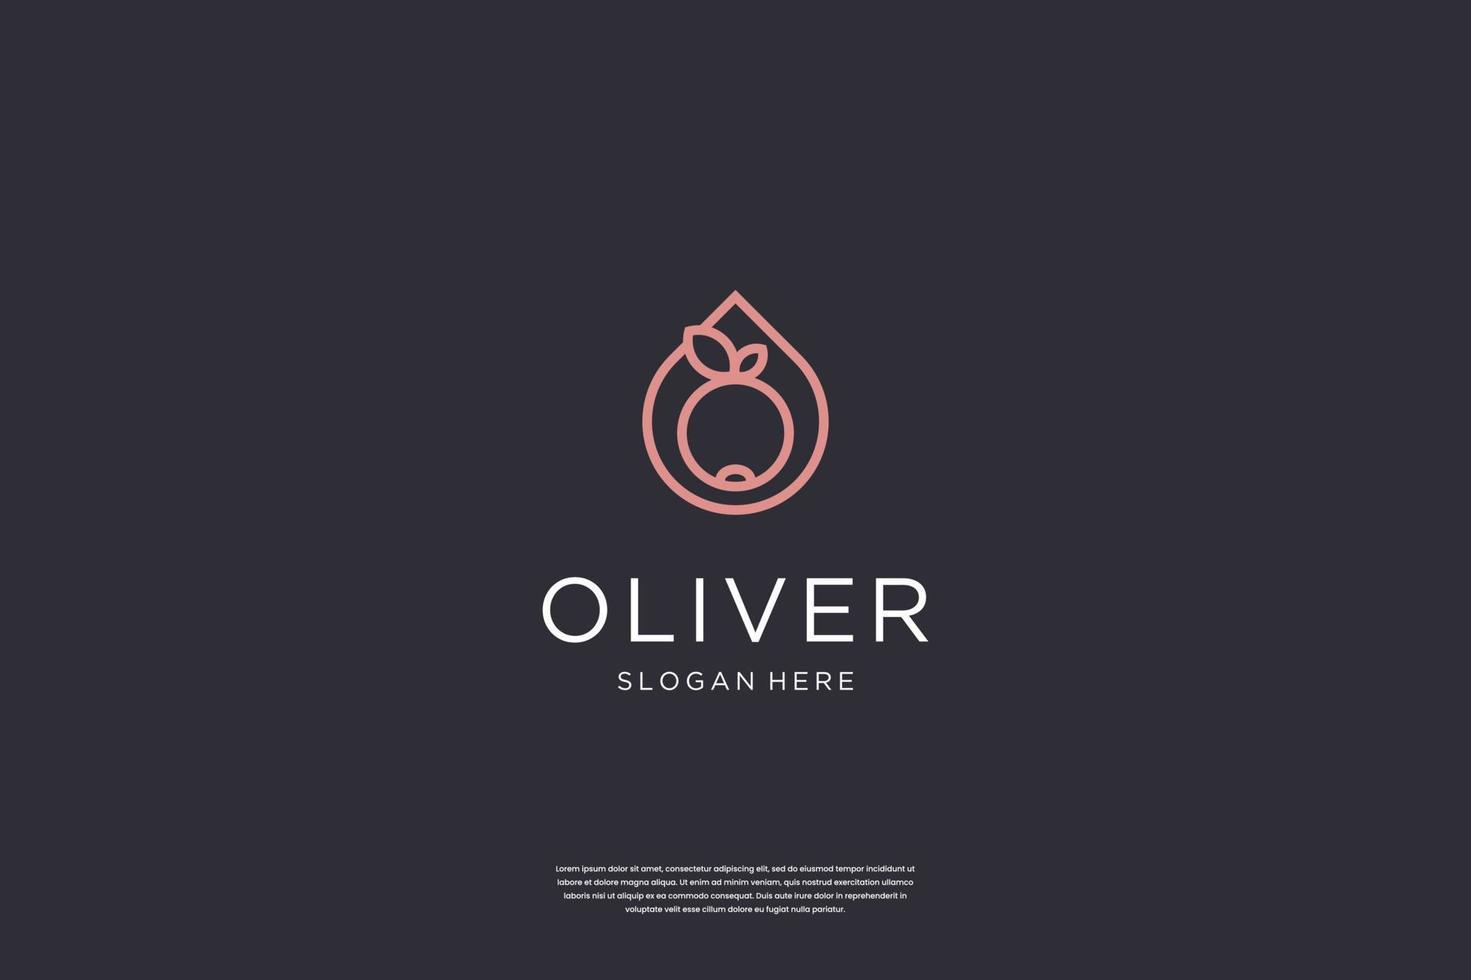 Minimalist elegant Olive Oil logo design with line art style vector